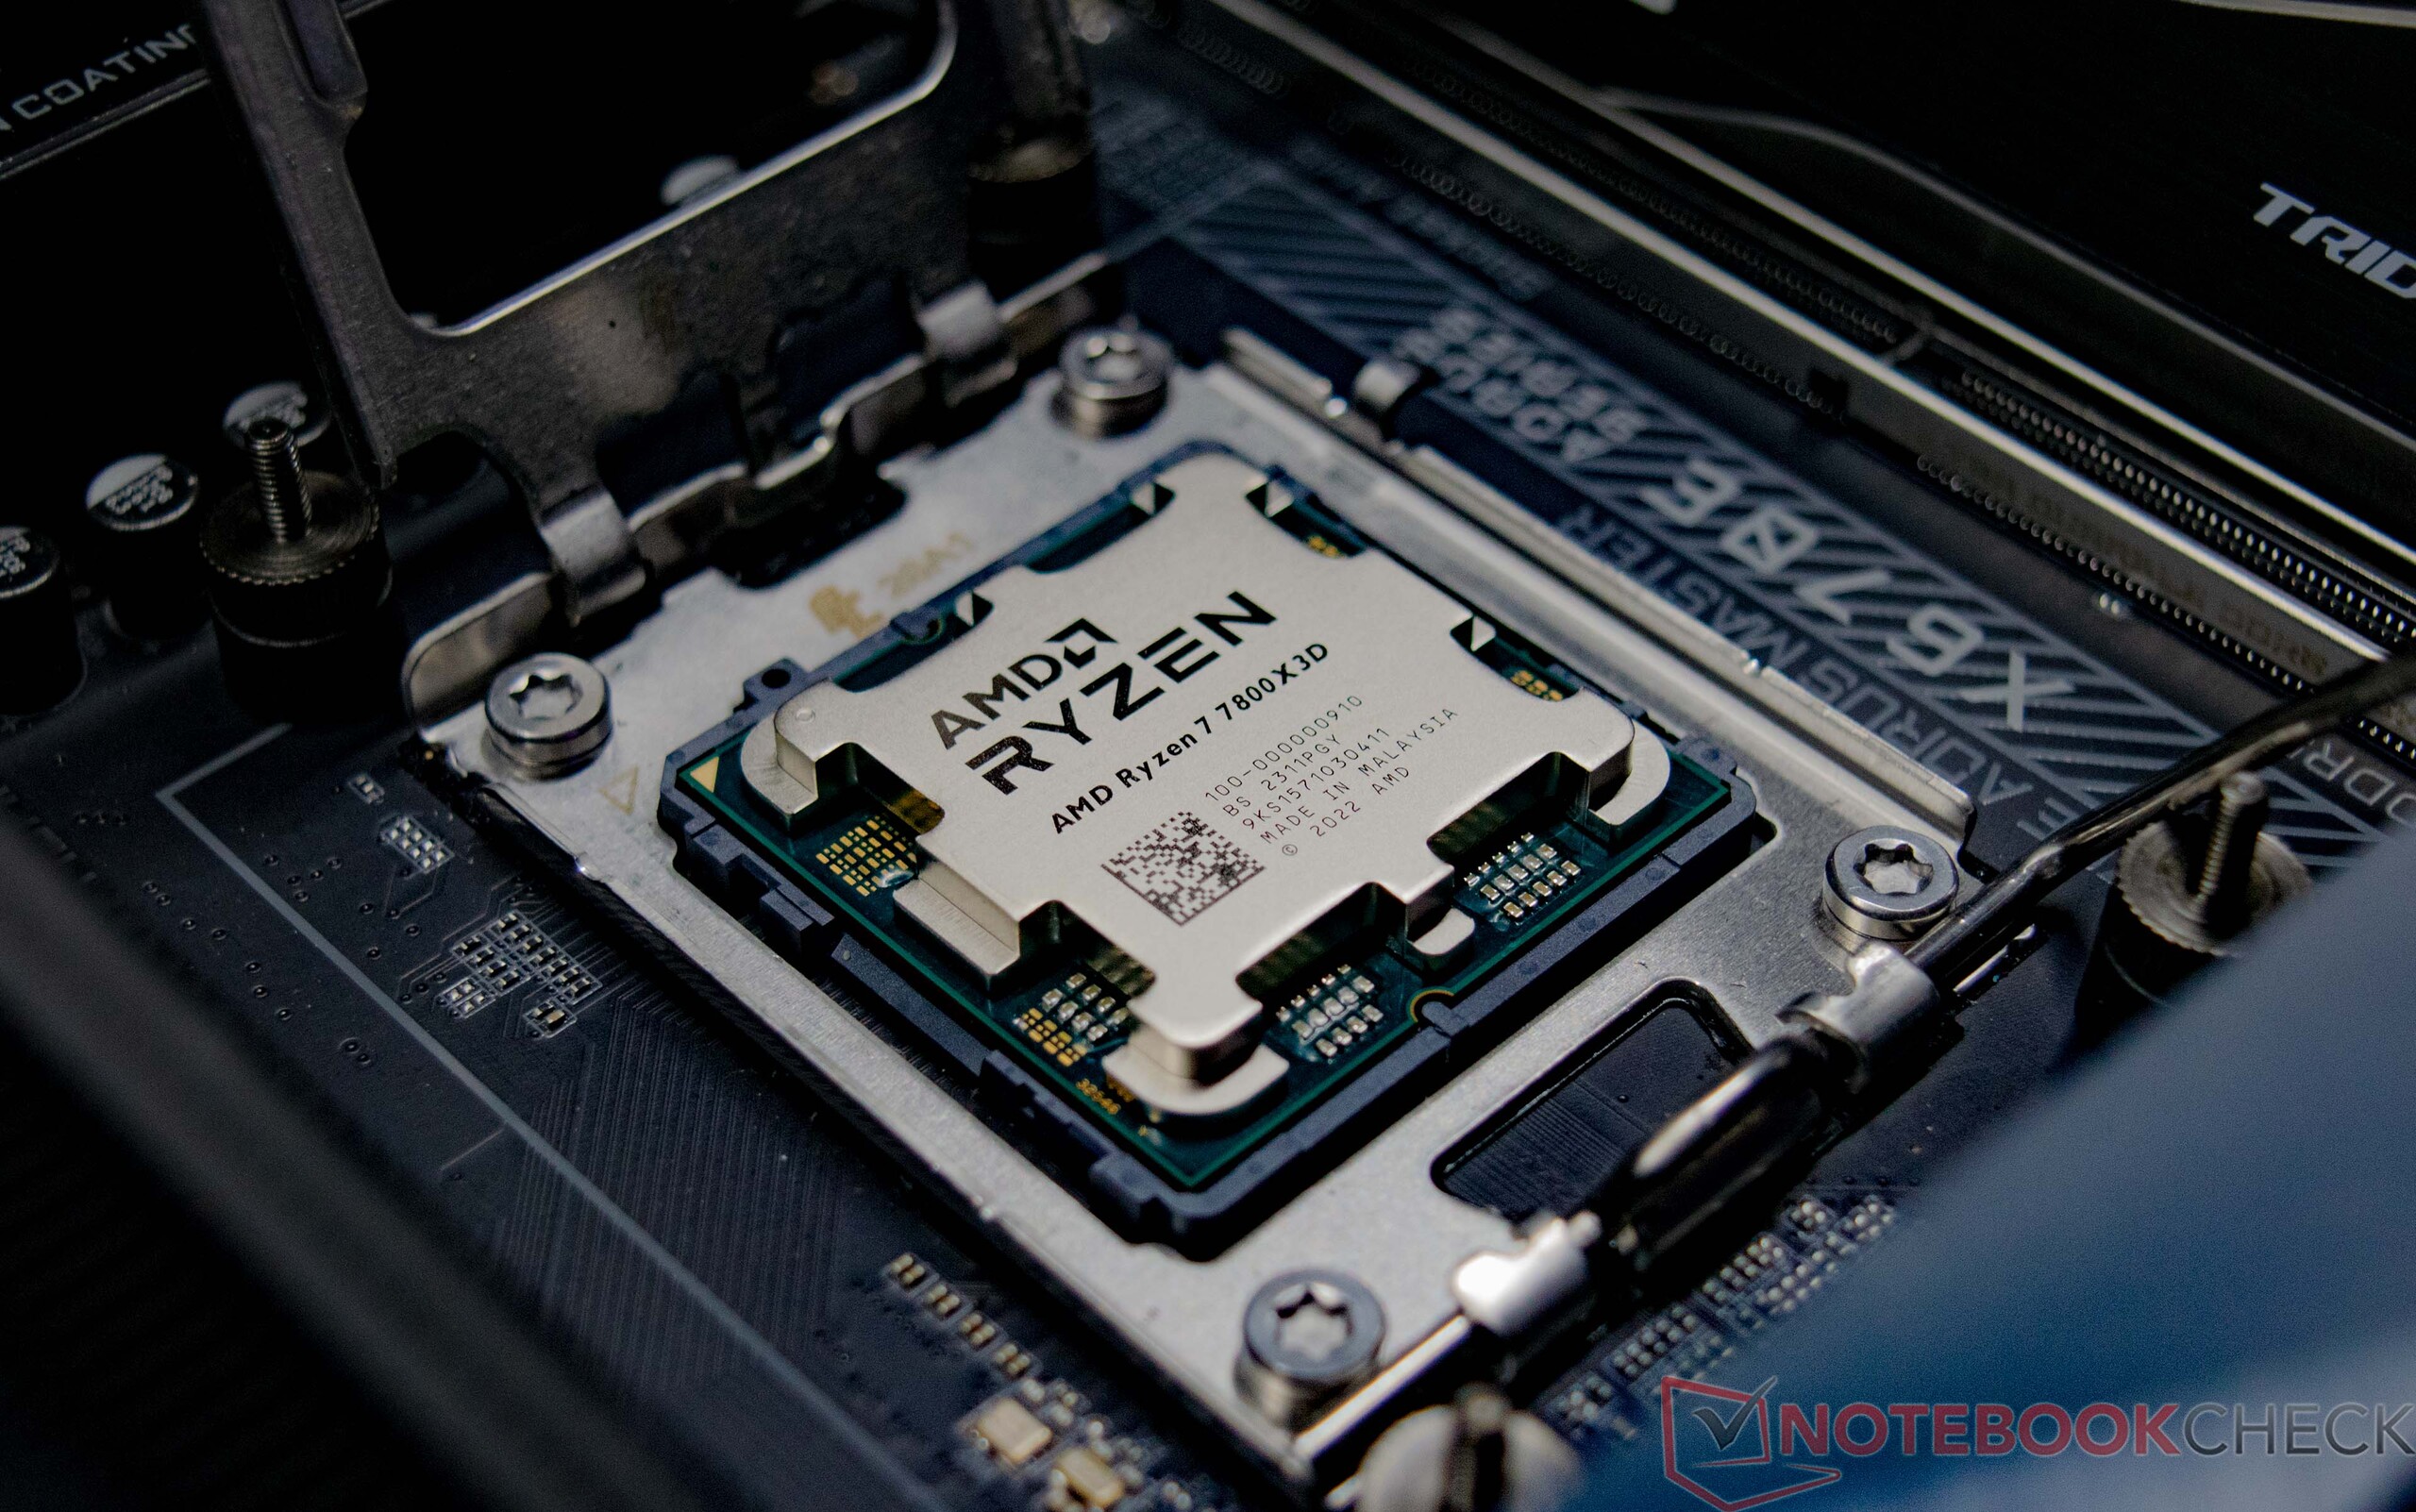 AMD Ryzen 7 7800X3D Review [Análisis Completo en Español]